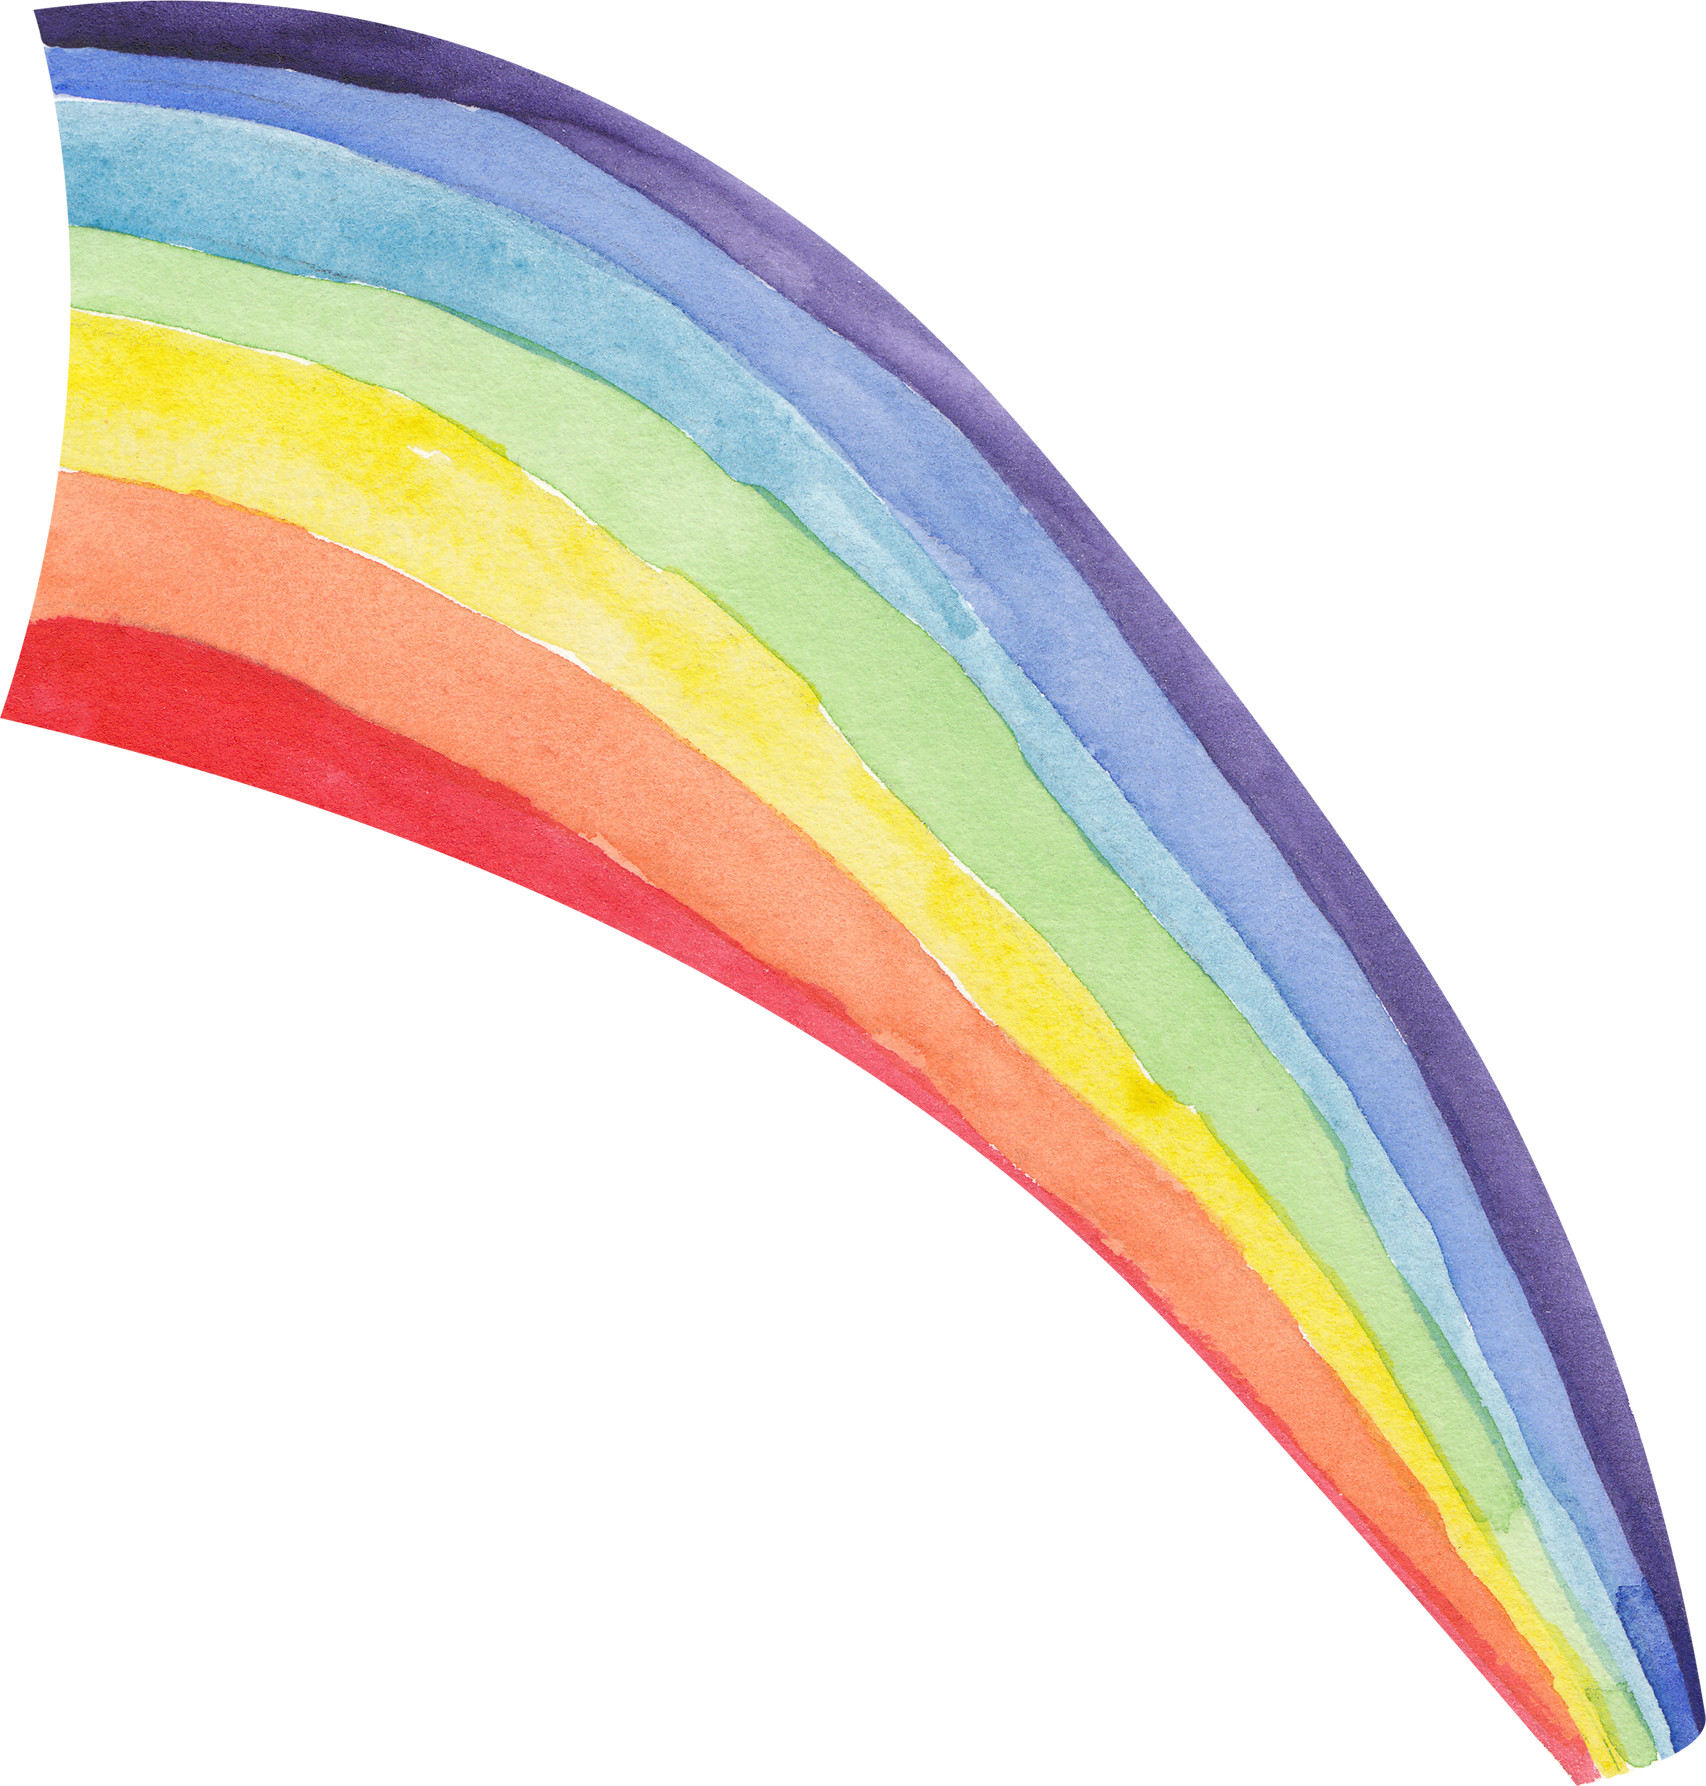 Watercolor rainbow 